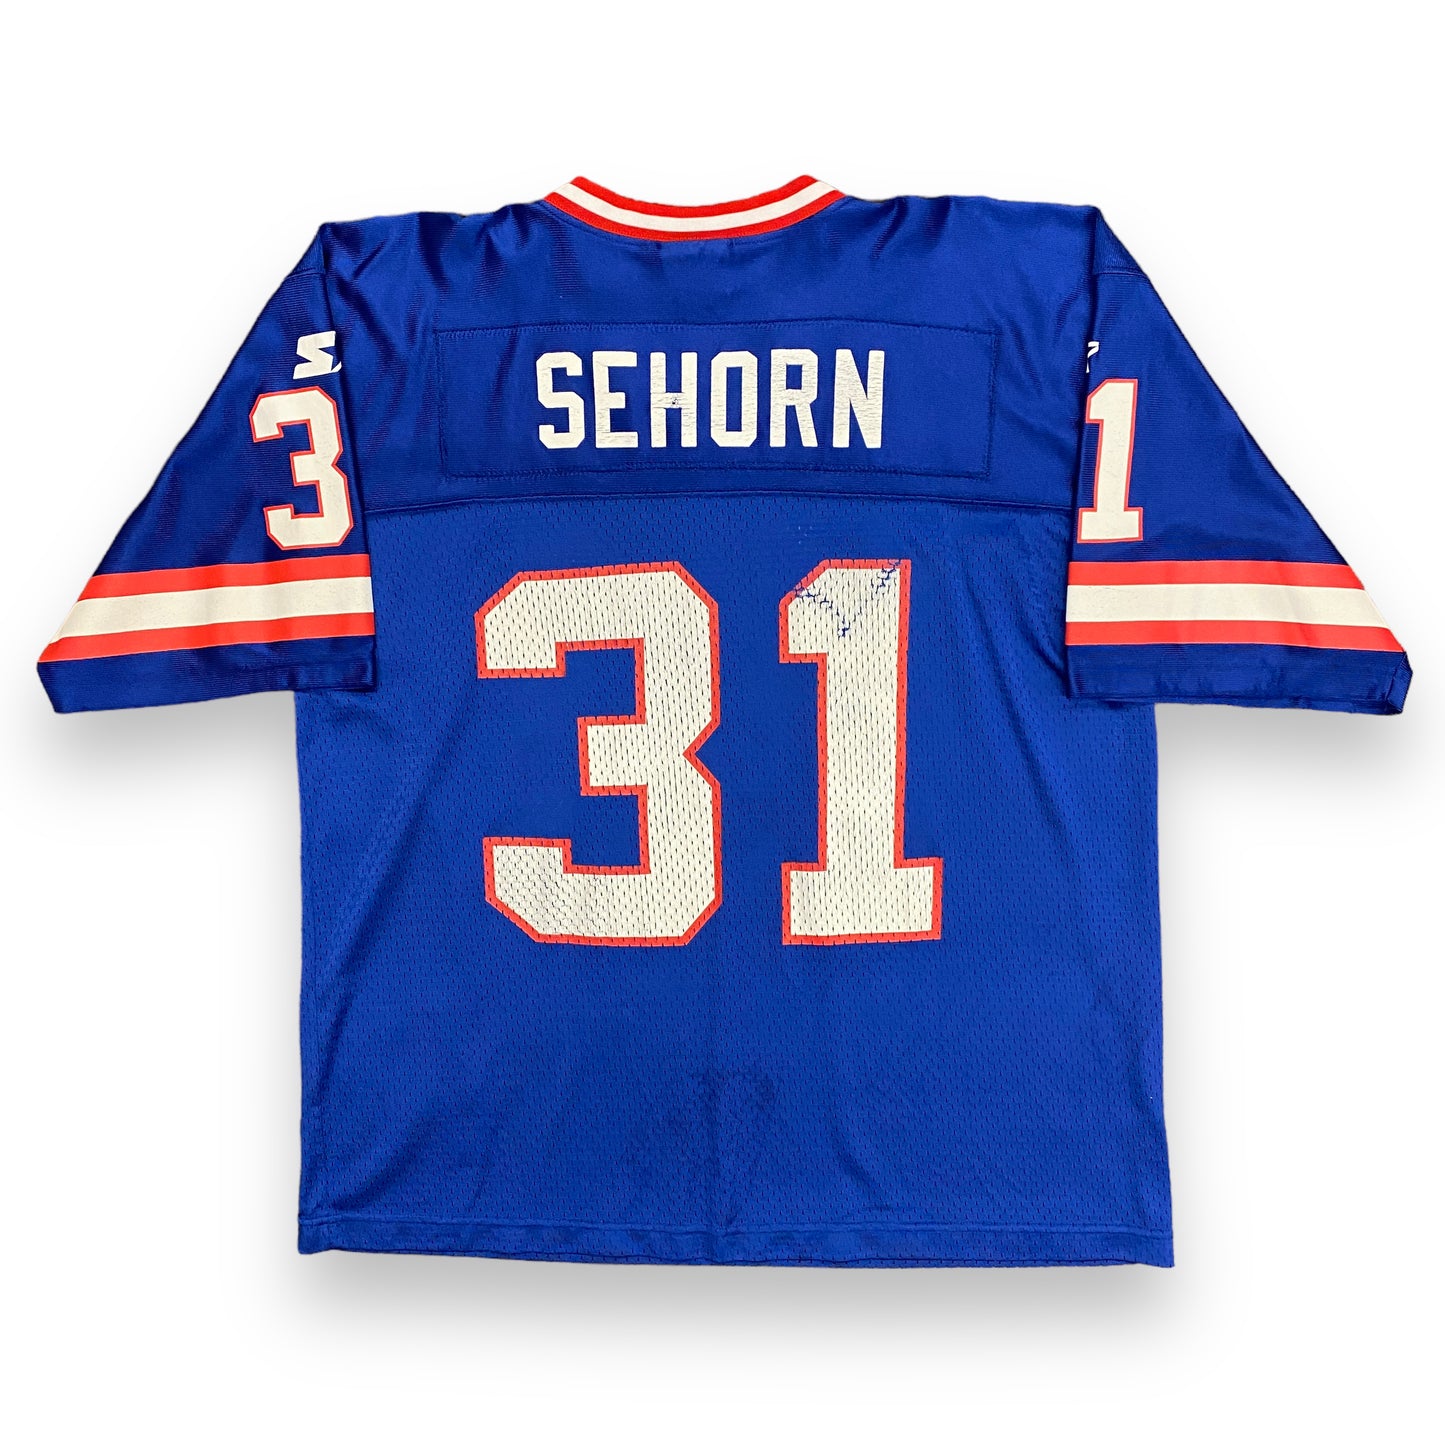 Vintage Starter New York Giants "Jason Sehorn" Jersey - Size Medium